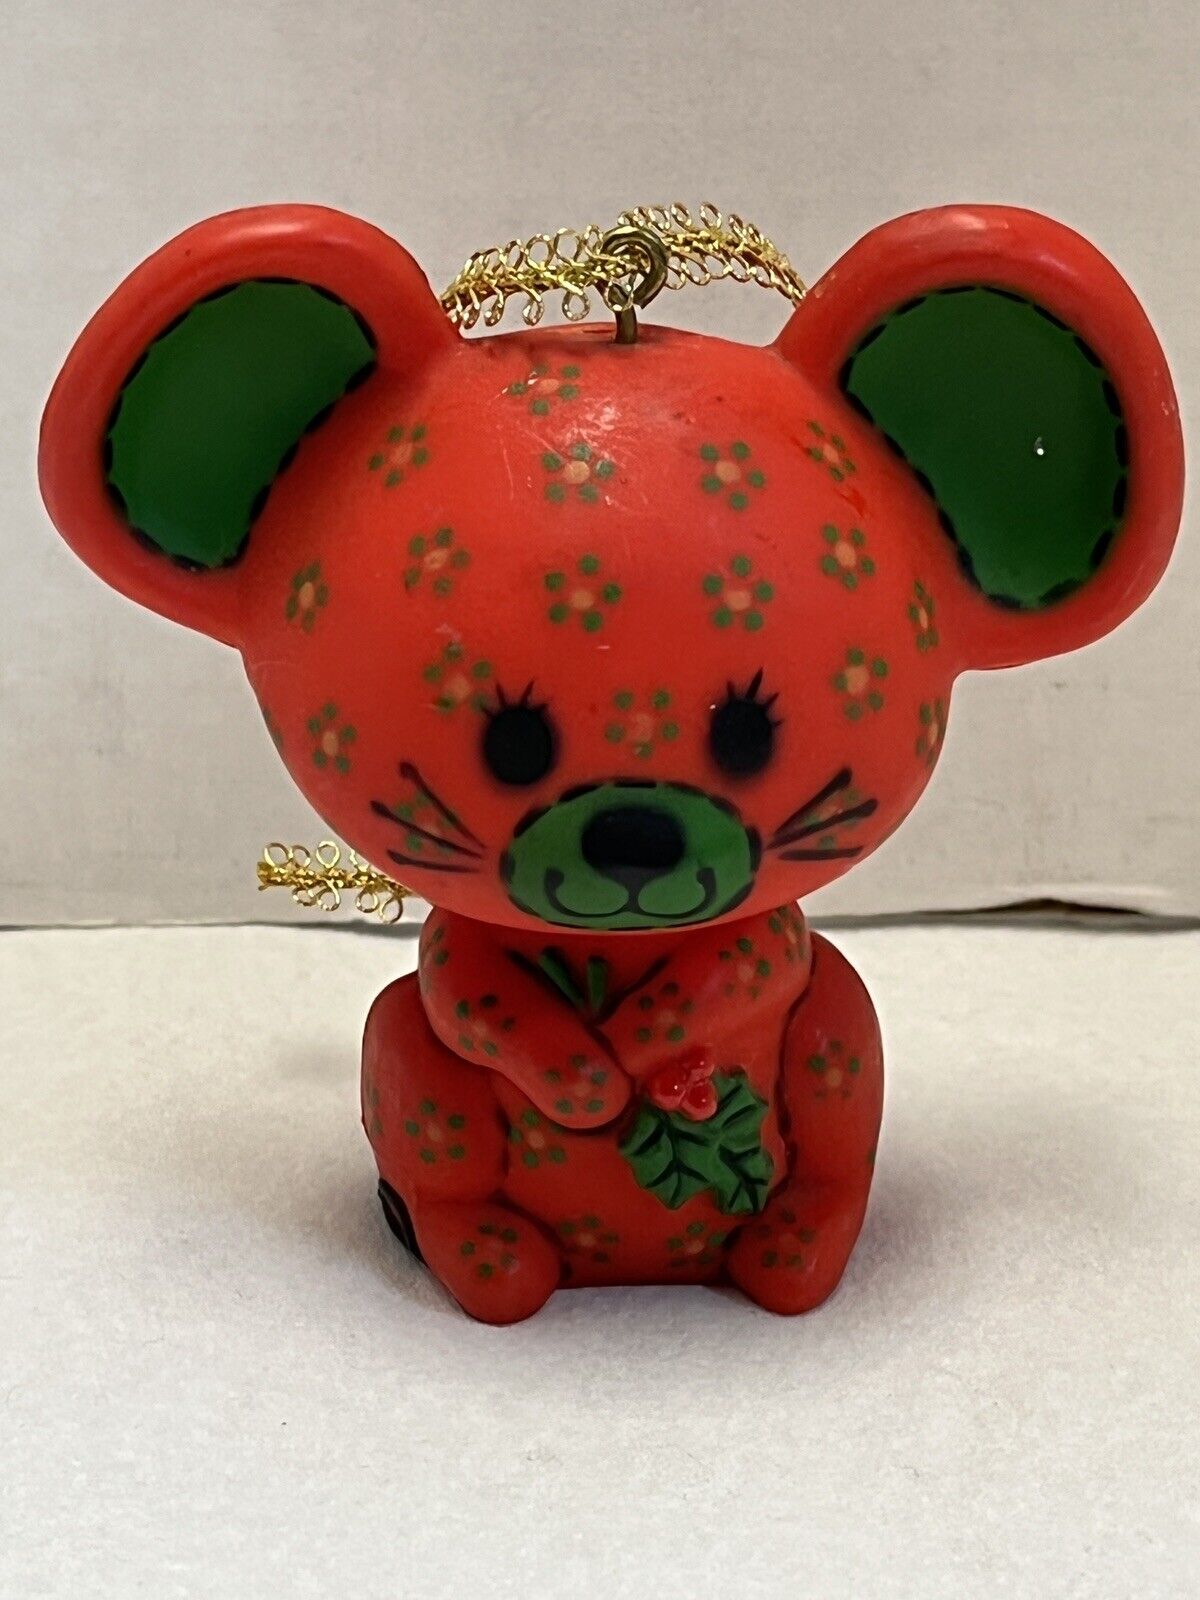 Vintage Hallmark ornament calico mouse